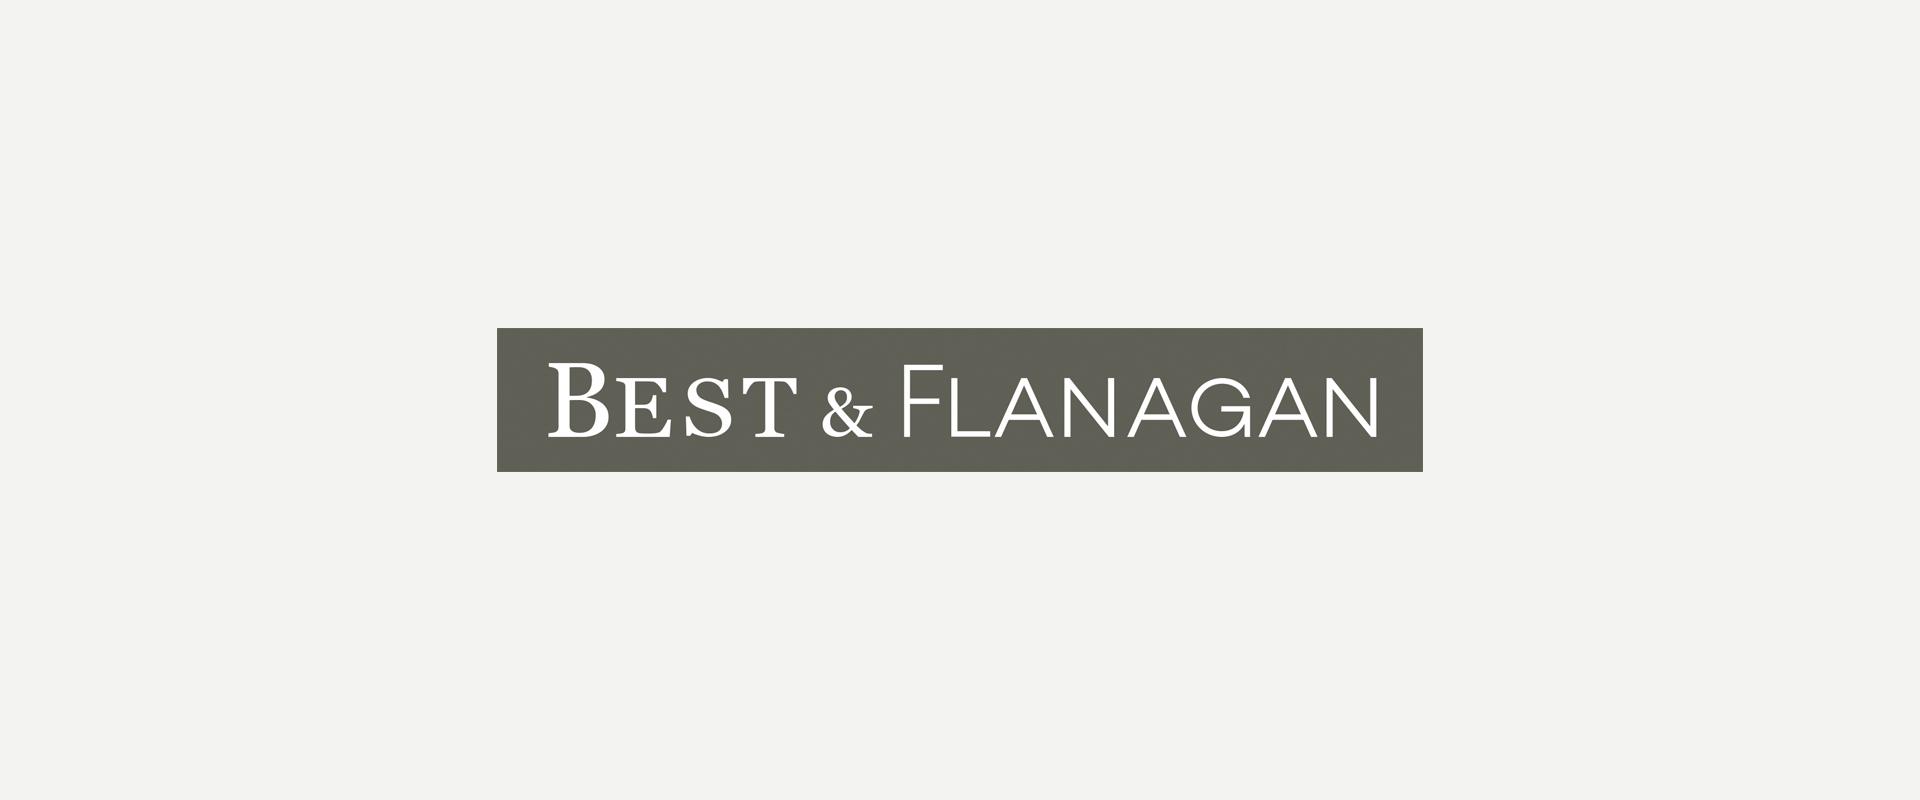 Flanagan Logo - Best & Flanagan